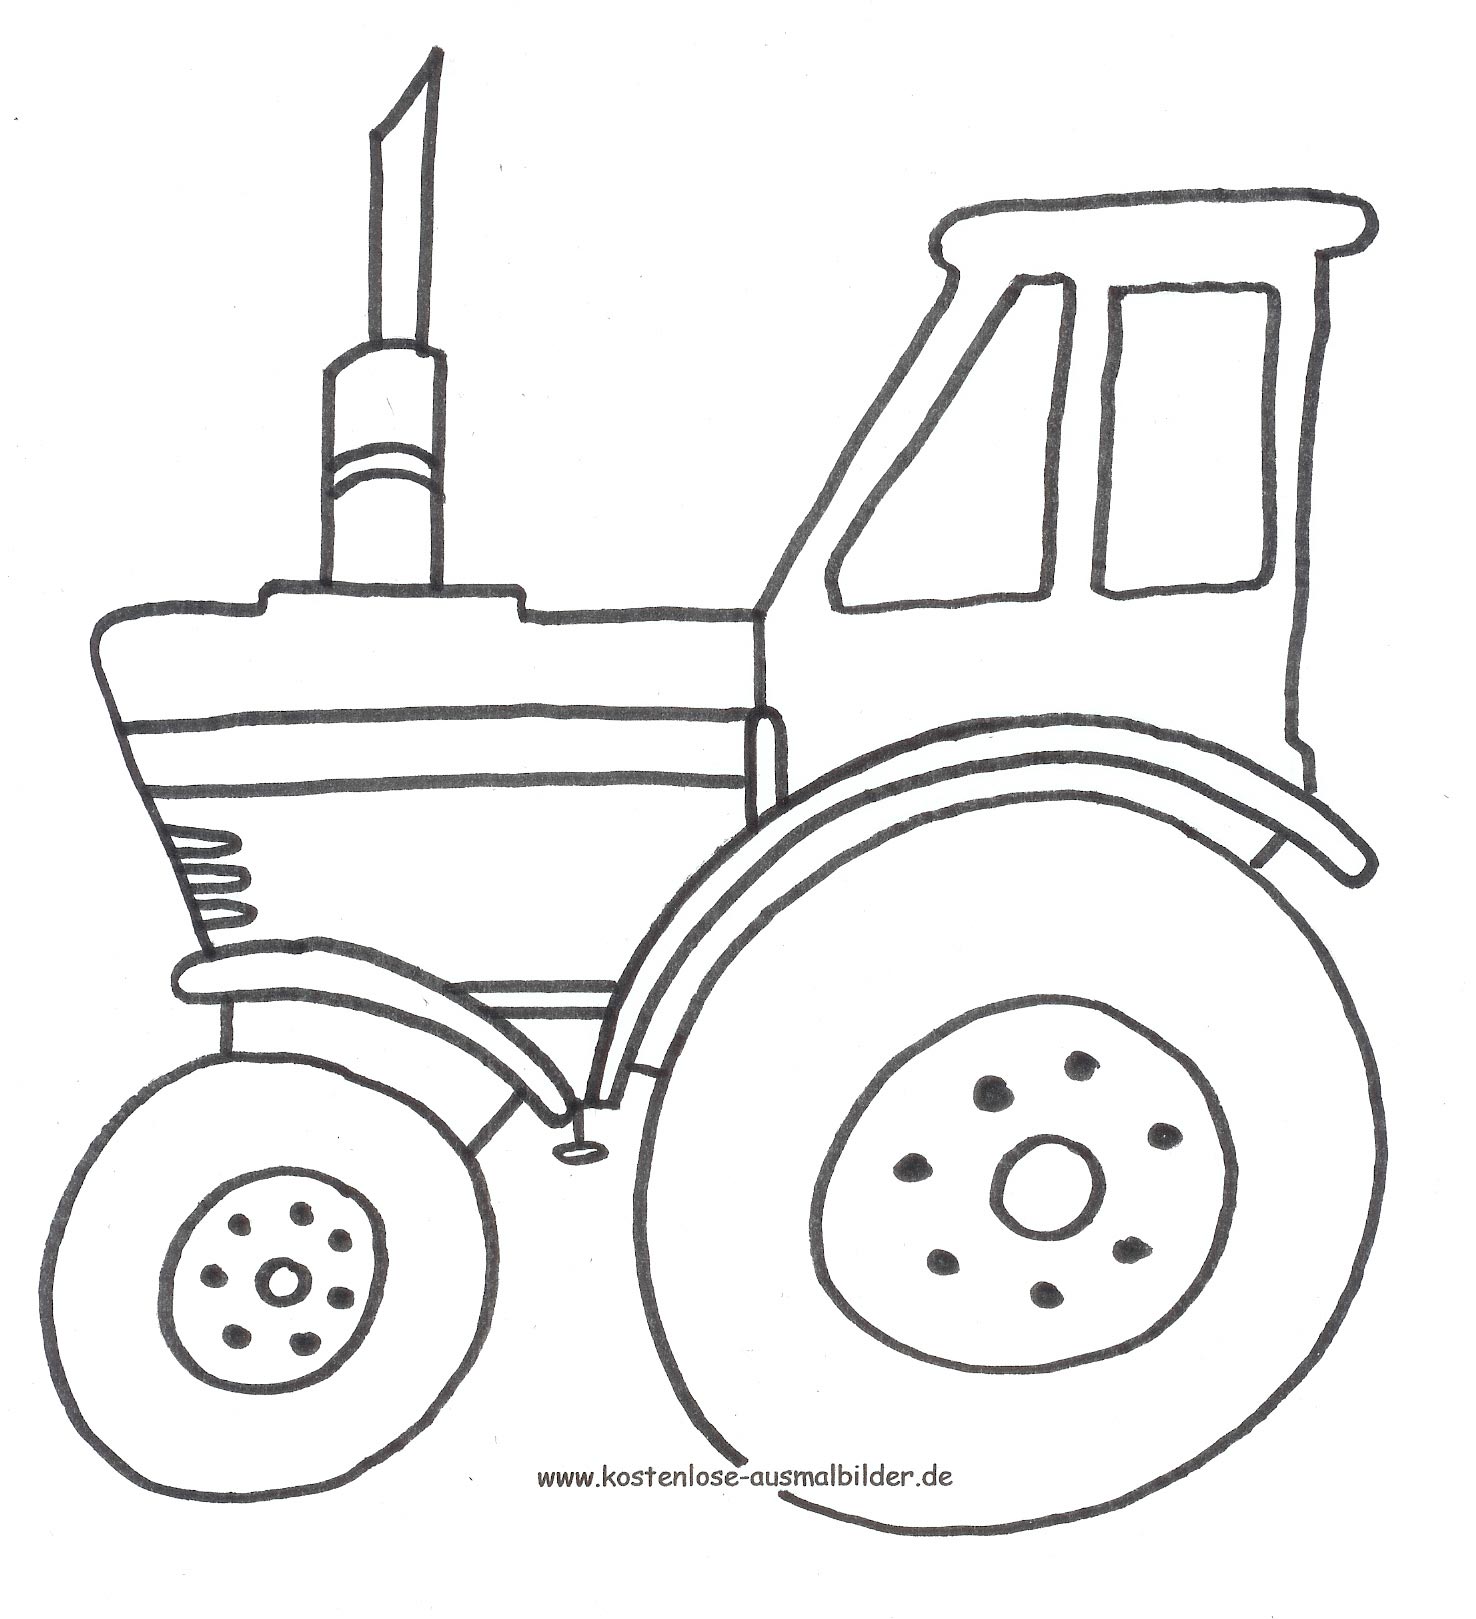 malvorlagen - ausmalbilder traktor | ausmalbilder